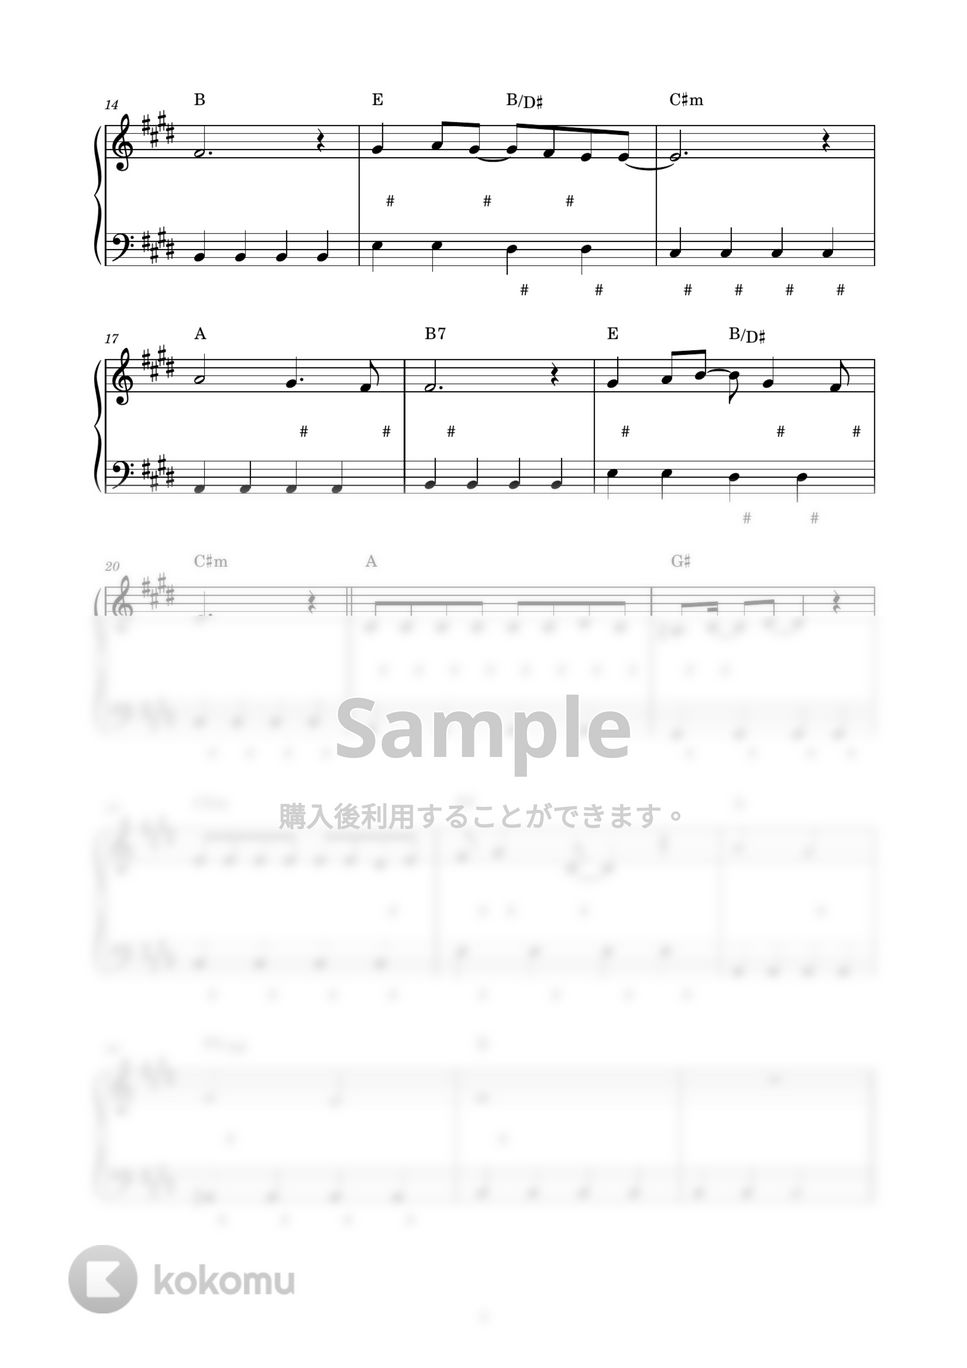 PUFFY - 愛のしるし (ピアノ楽譜 / かんたん両手 / 歌詞付き / ドレミ付き / 初心者向き) by piano.tokyo